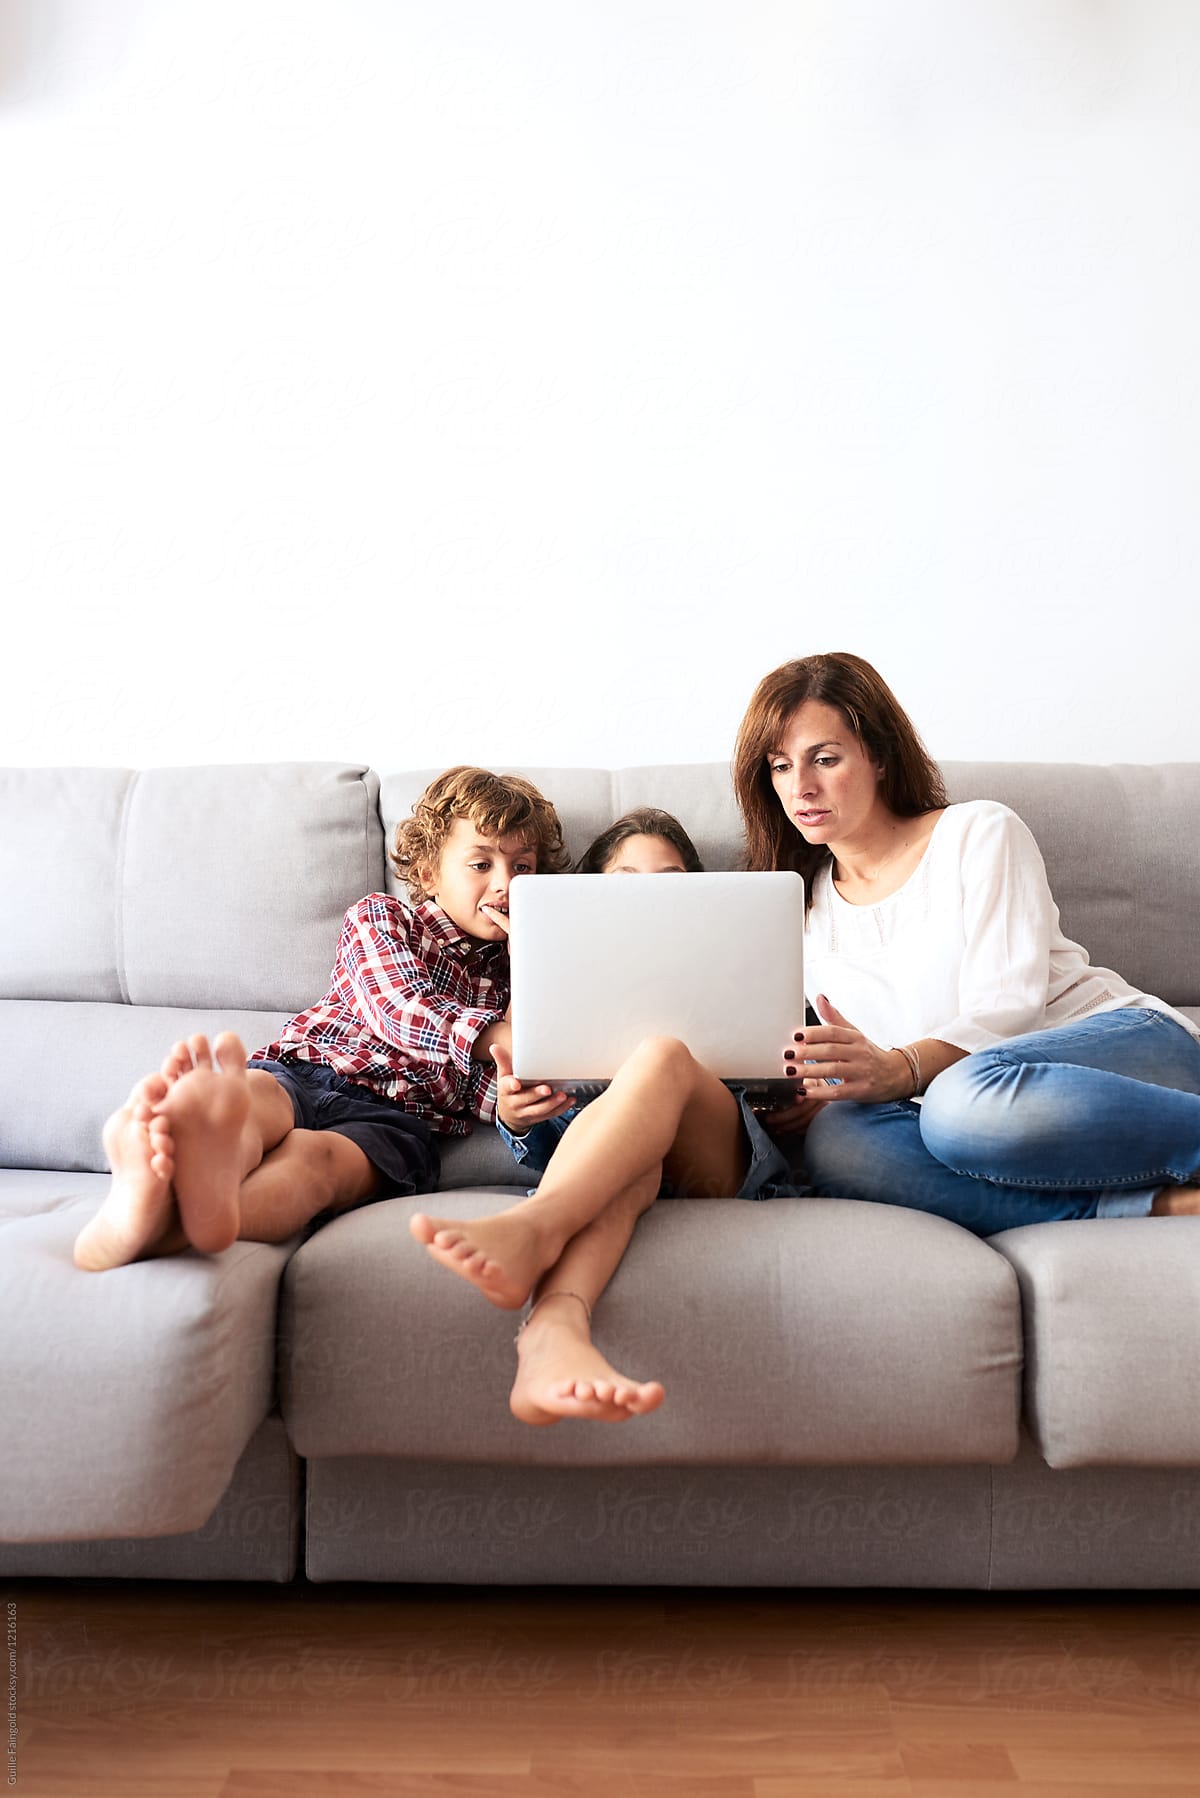 Barefoot Kids On Sofa Gaming» del colaborador de Stocksy «Guille Faingold»  - Stocksy